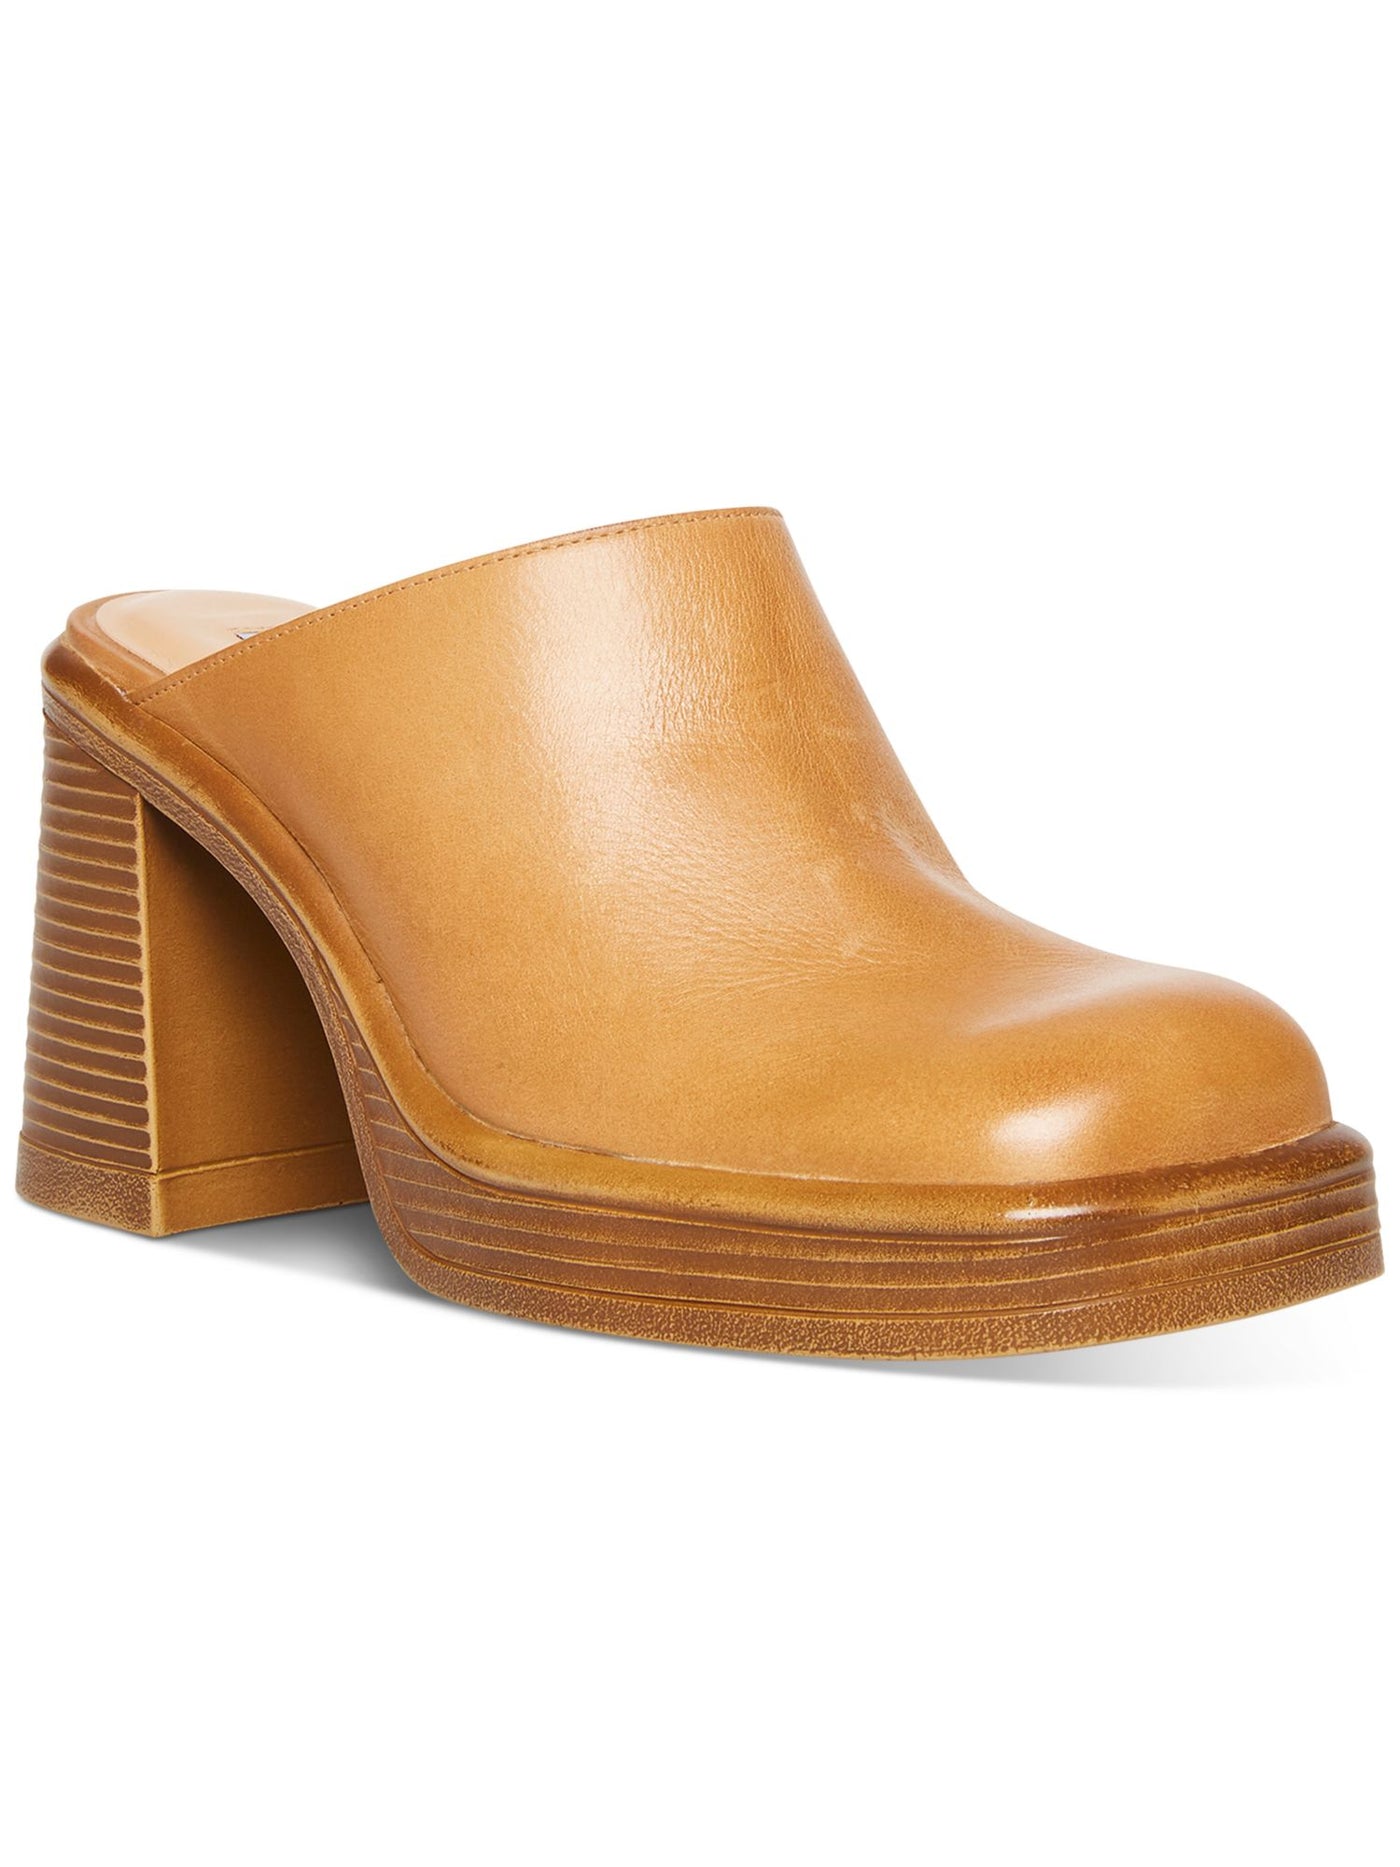 STEVE MADDEN Womens Beige 1" Platform Padded Goring Flirtie Square Toe Block Heel Slip On Leather Clogs Shoes 9 M